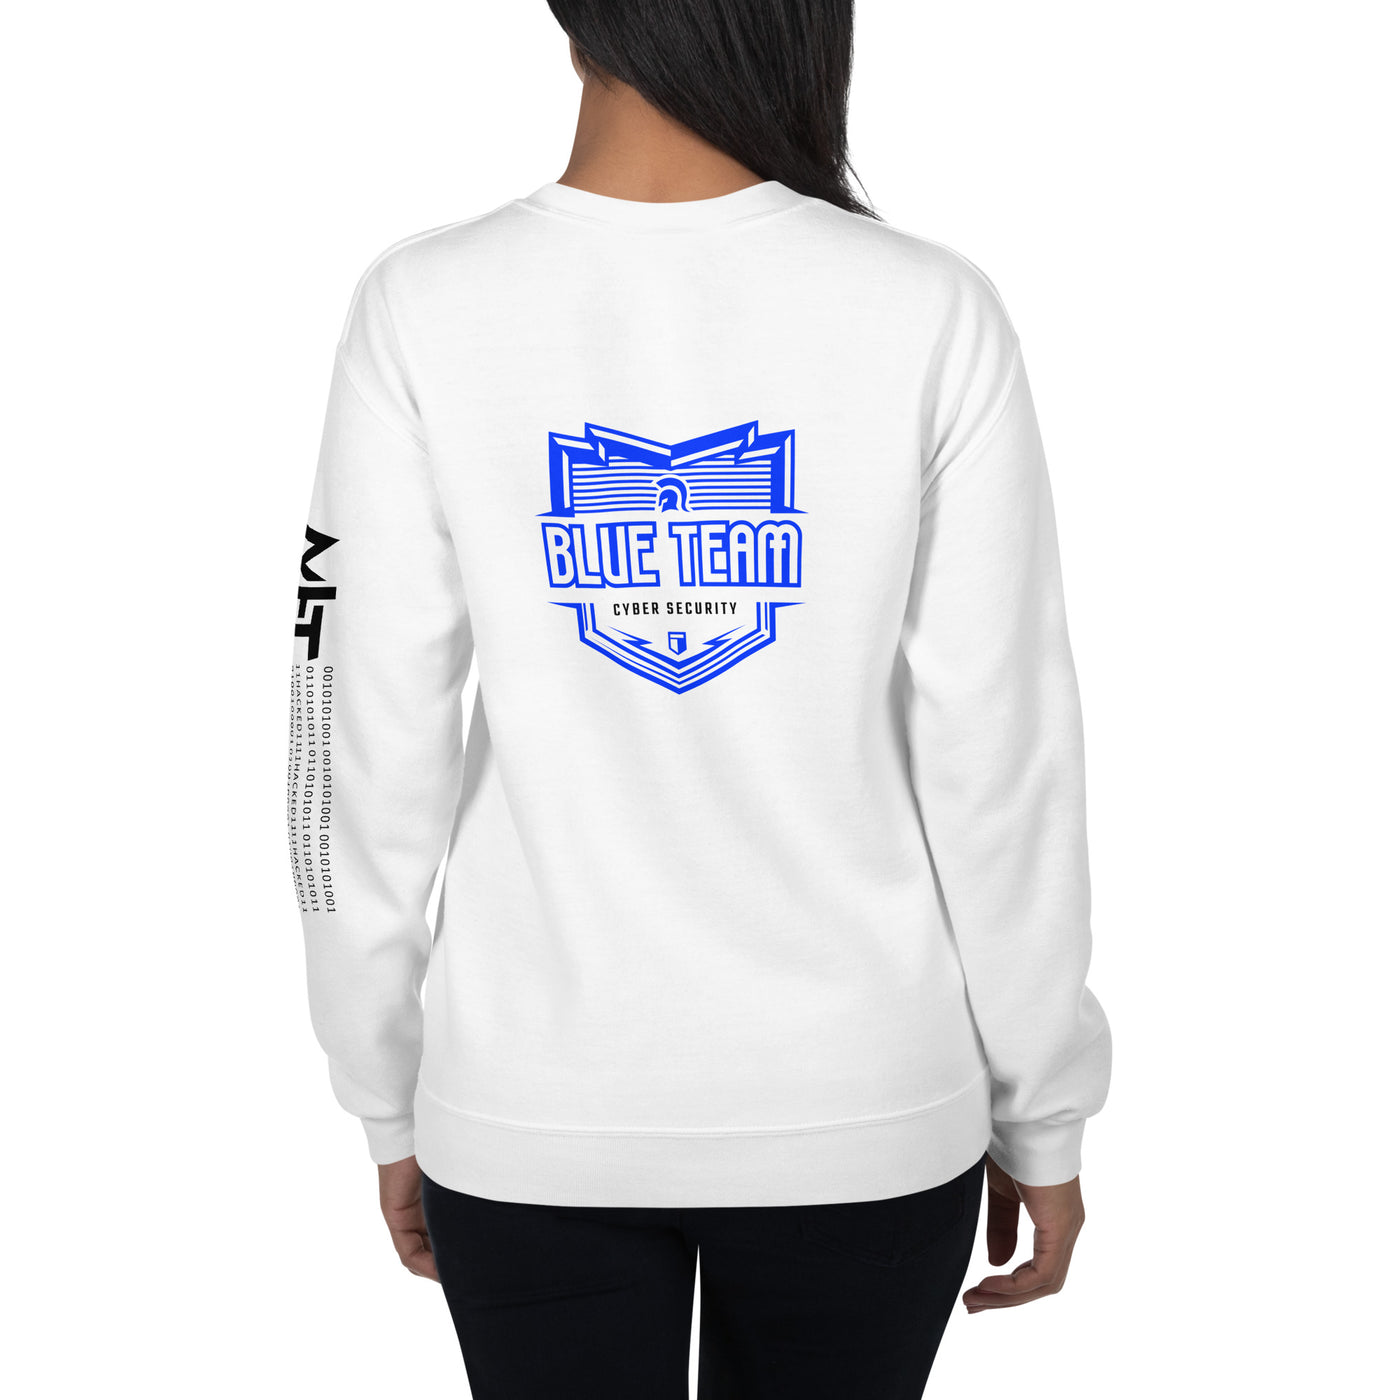 Cyber Security Blue Team V15 - Unisex Sweatshirt ( Back Print )